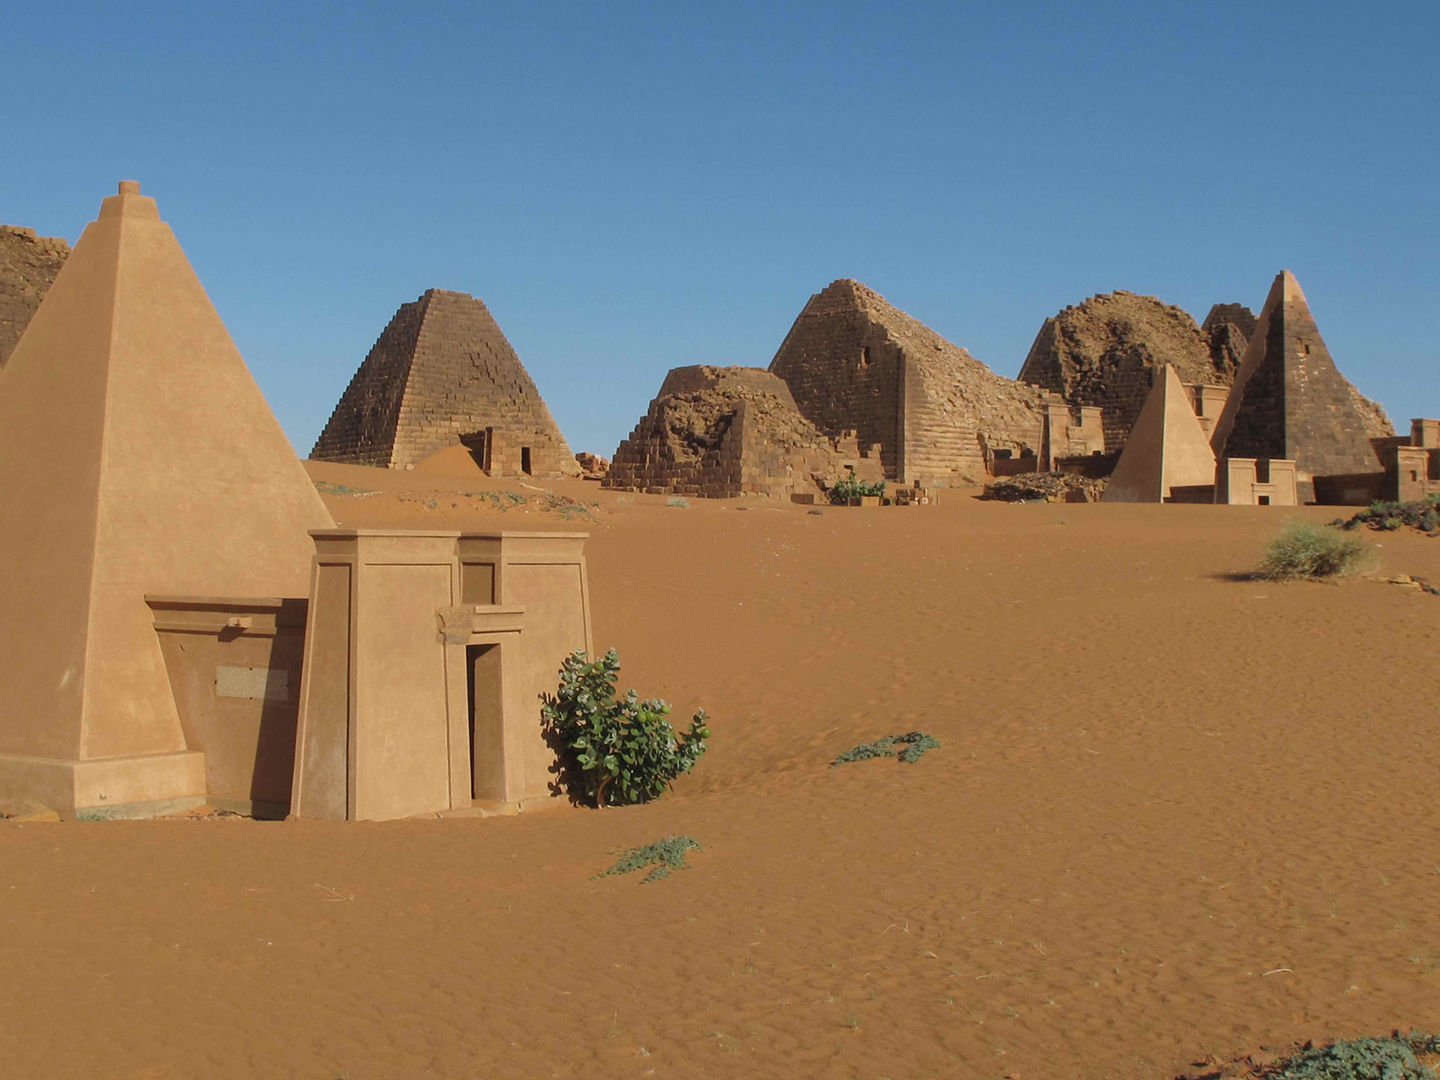 A image of pyramids at Meroe.